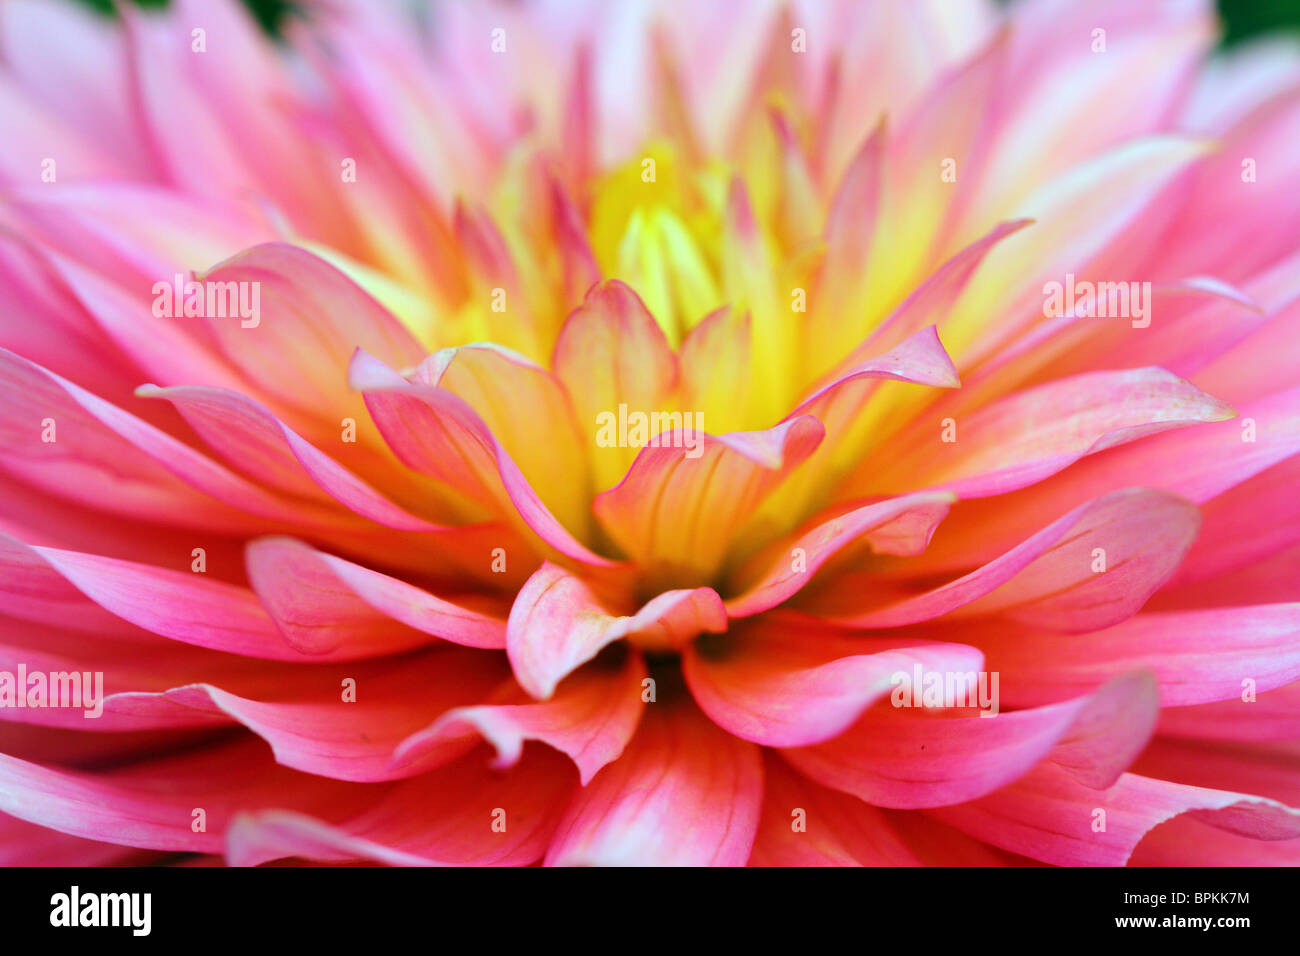 Dahlia rose flower close up Banque D'Images